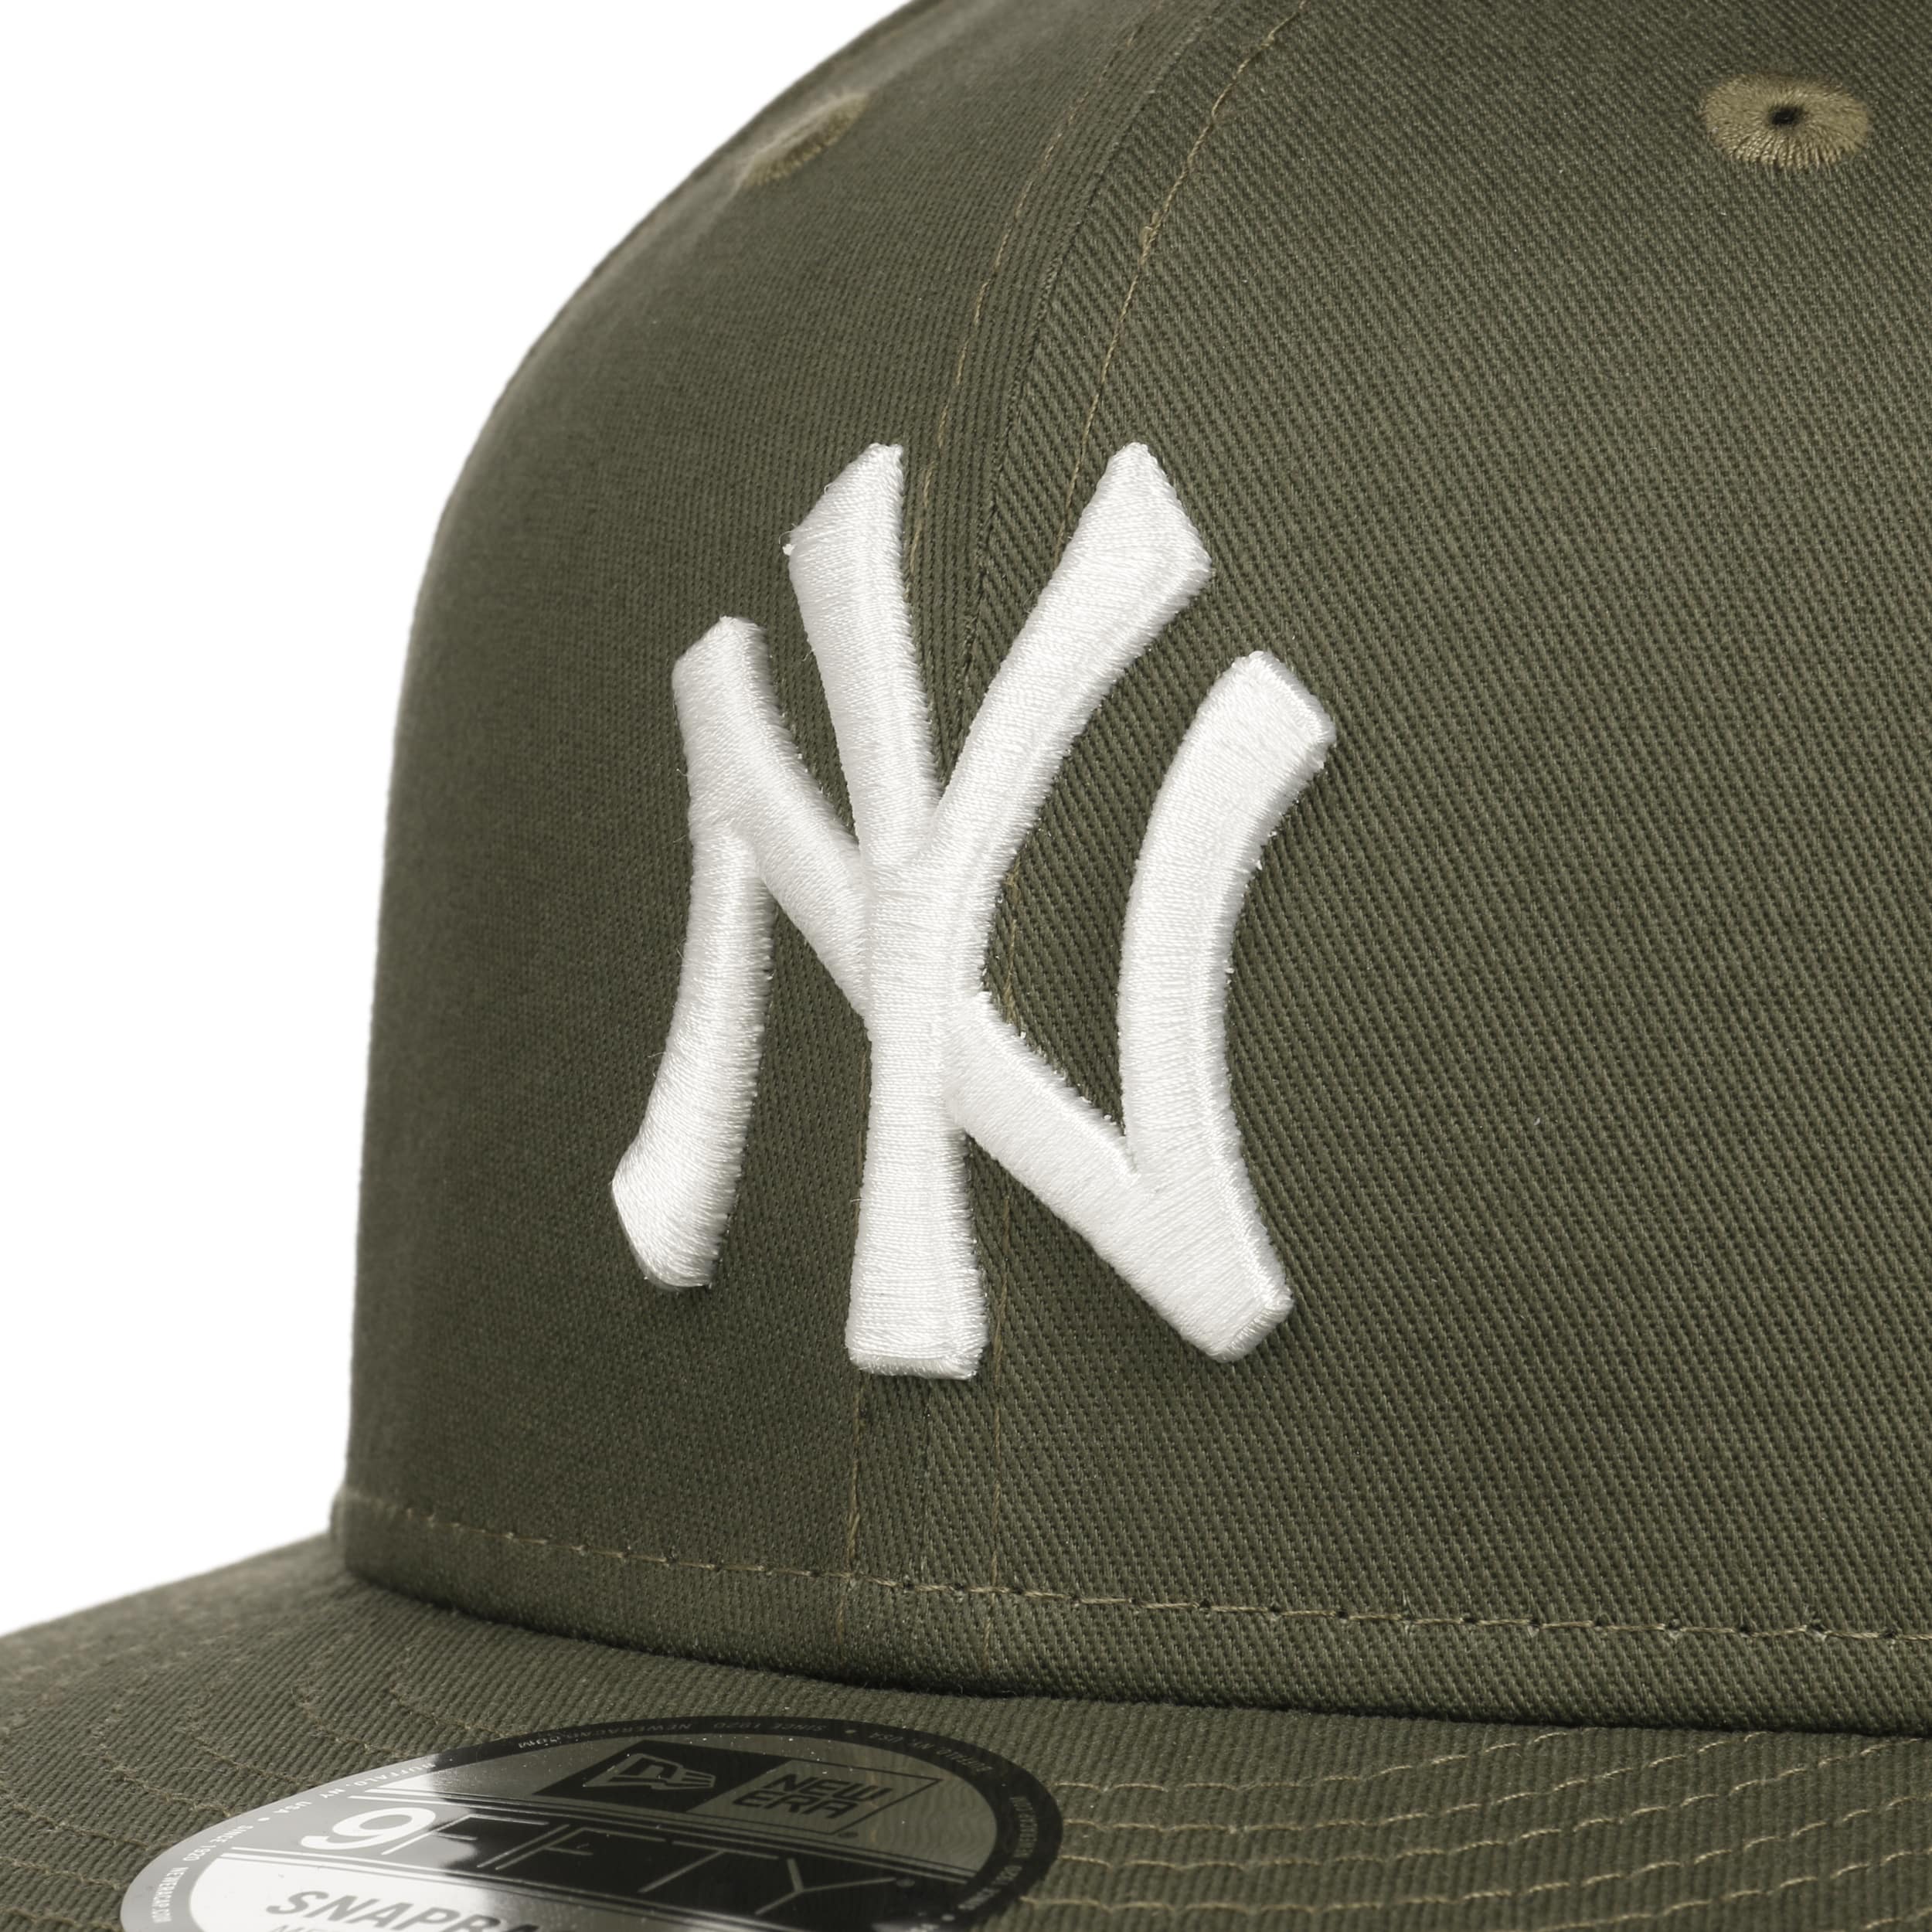 Men’s New Era Cap Black | Kelly Green Metallic MLB NY Yankees 59FIFTY